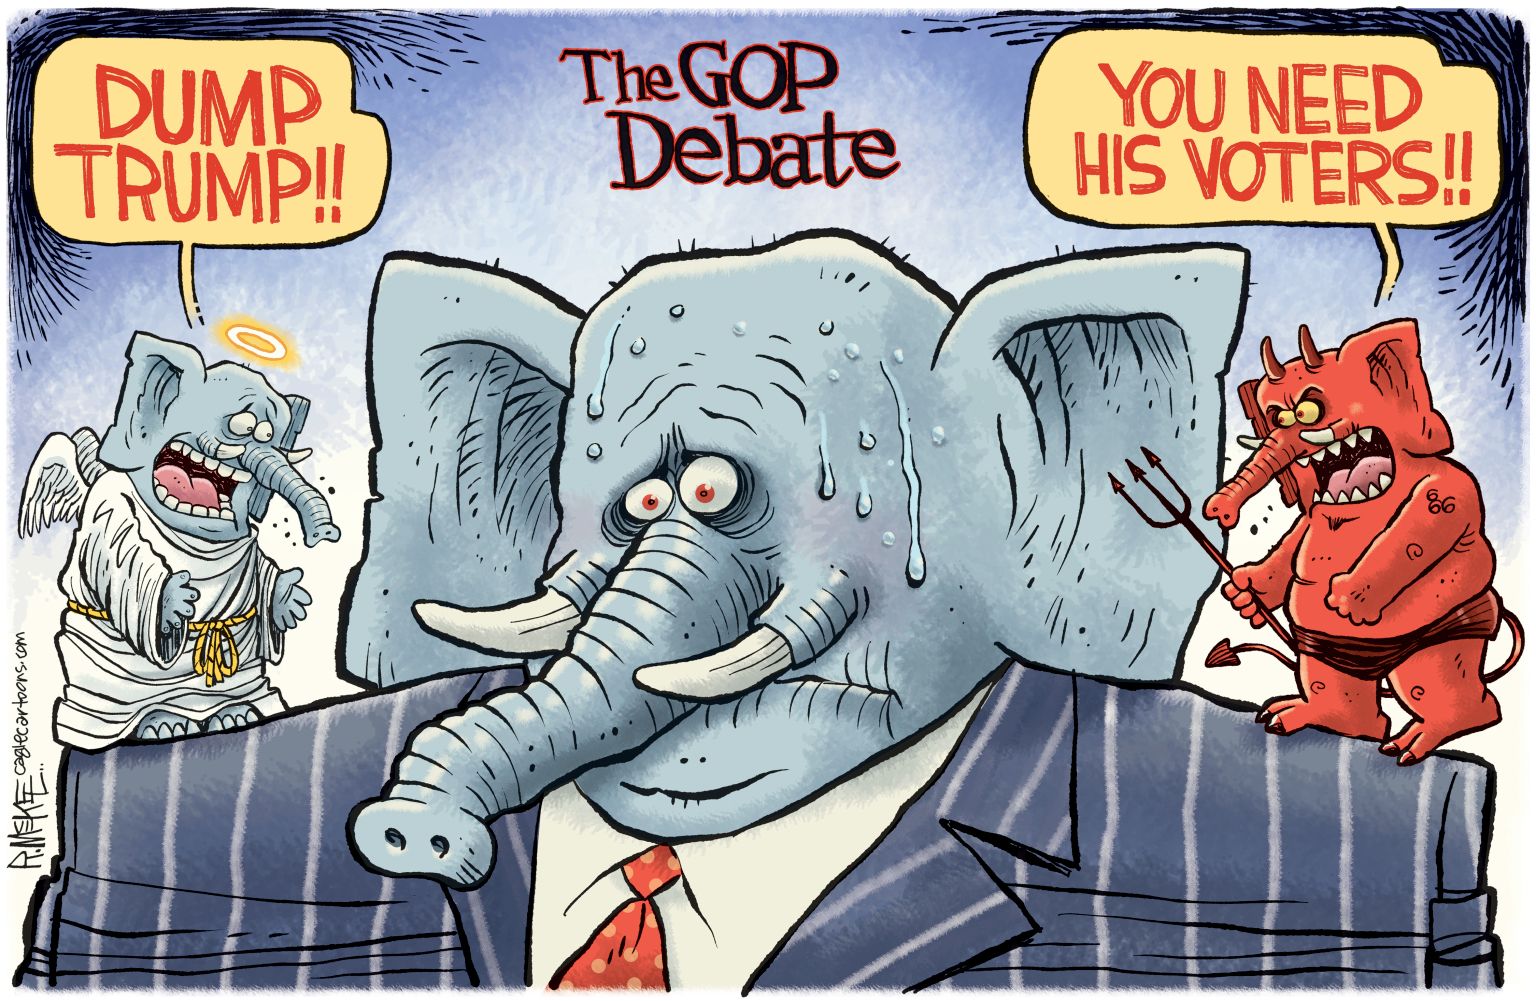 GOP Debate - newsjustin.press political cartoon